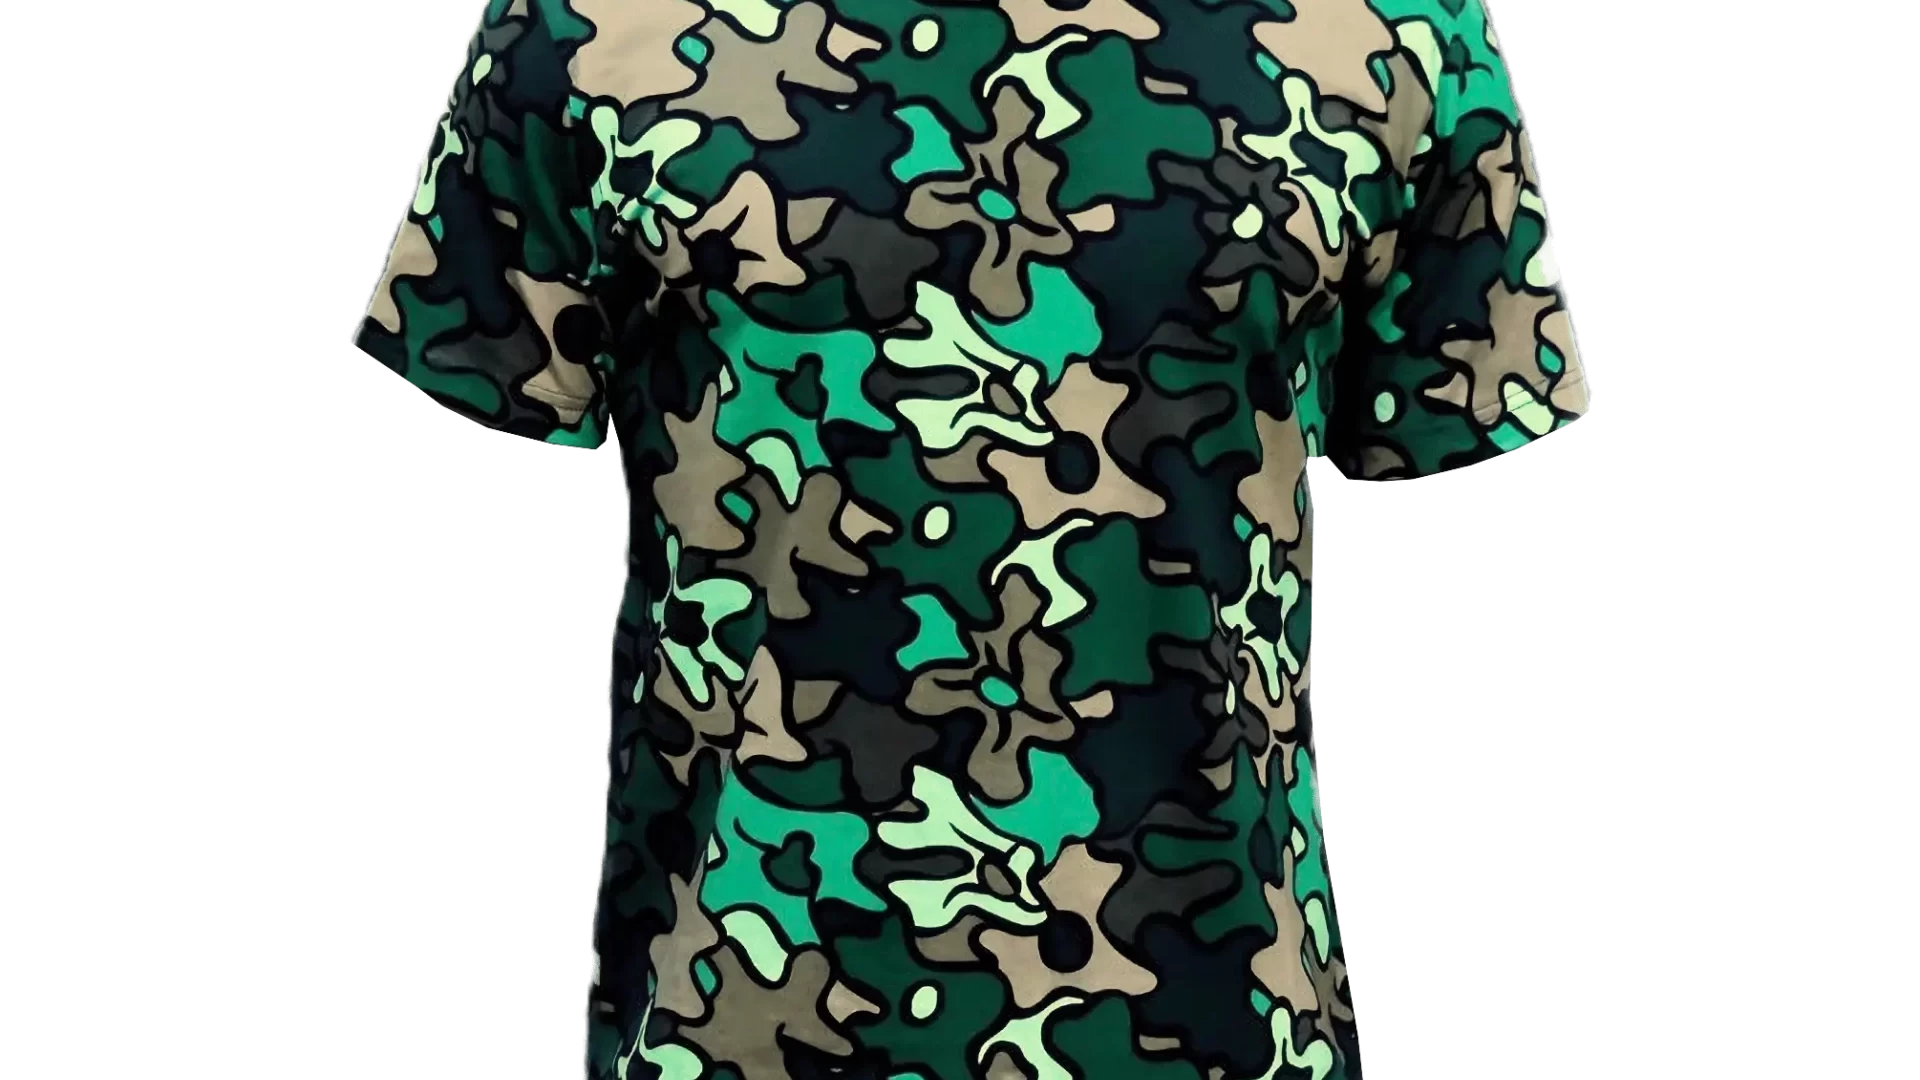 Men's 2006 Adidas Originals Green Safety Camo T-Shirt: Startling (EnLawded.com file #lmchk85151ip2y125200kg9st)